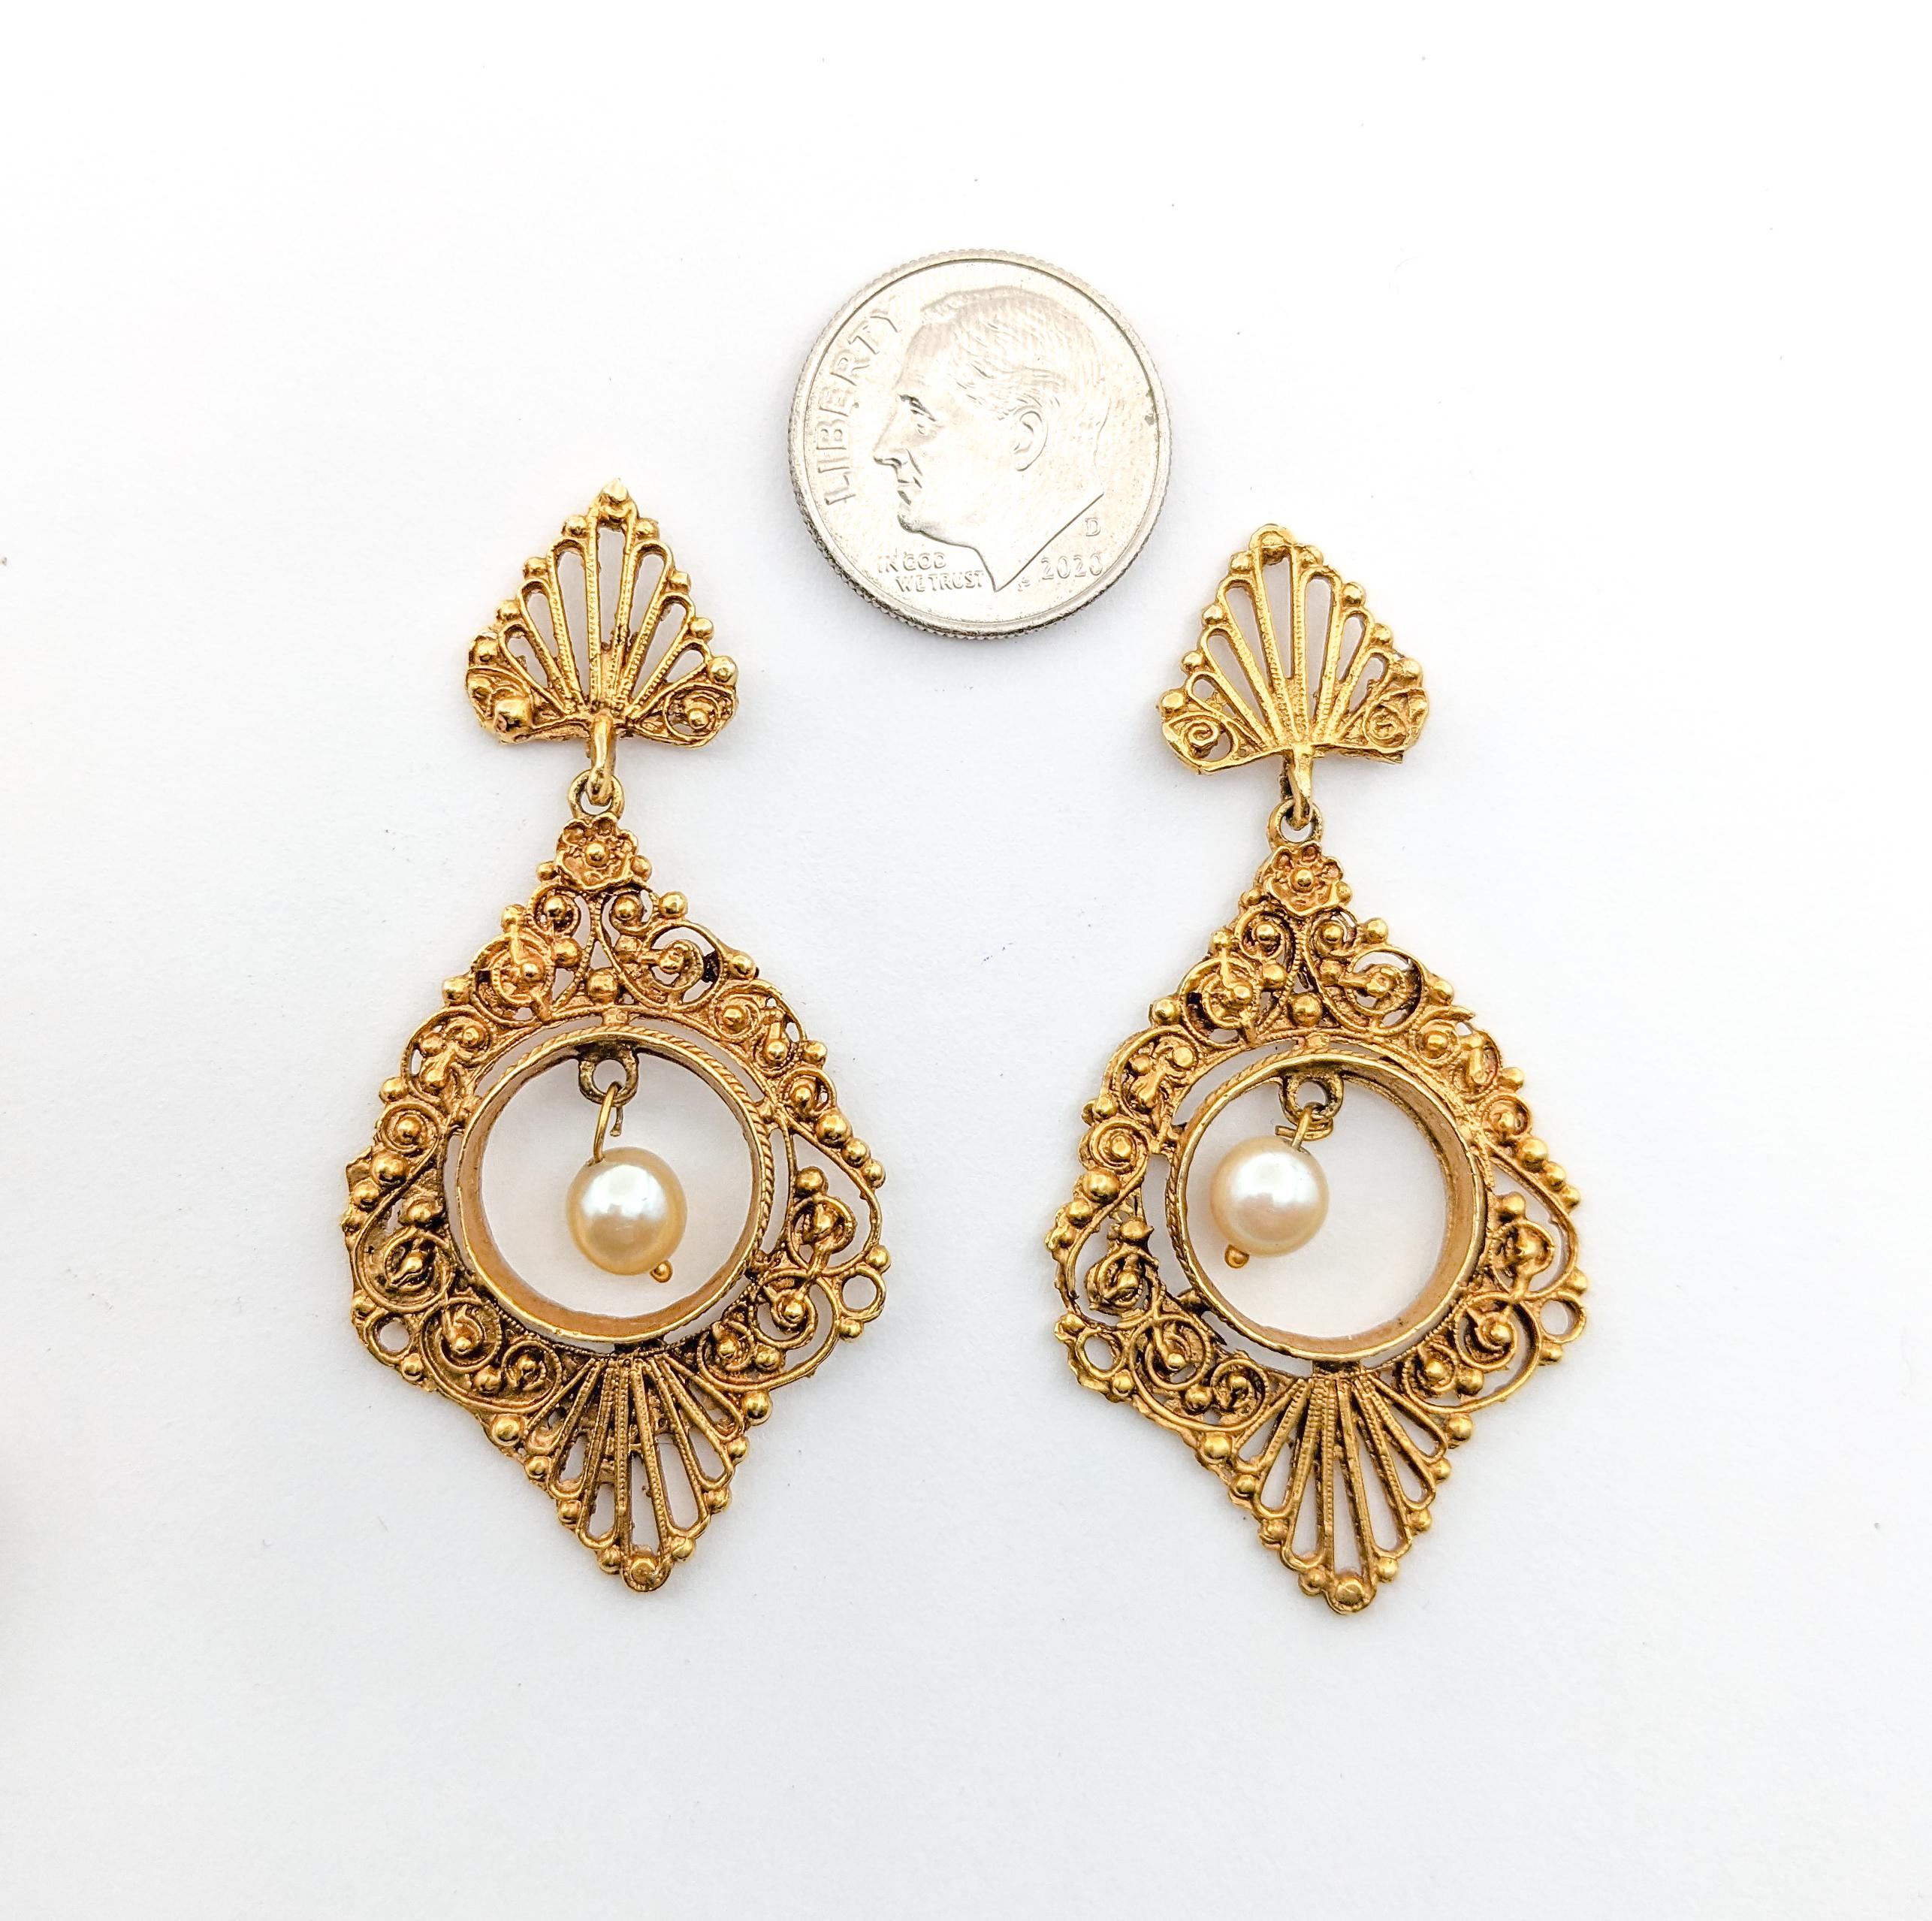 Modern Romantic Vintage Filigree Pearl Drop Earrings in Yellow Gold For Sale